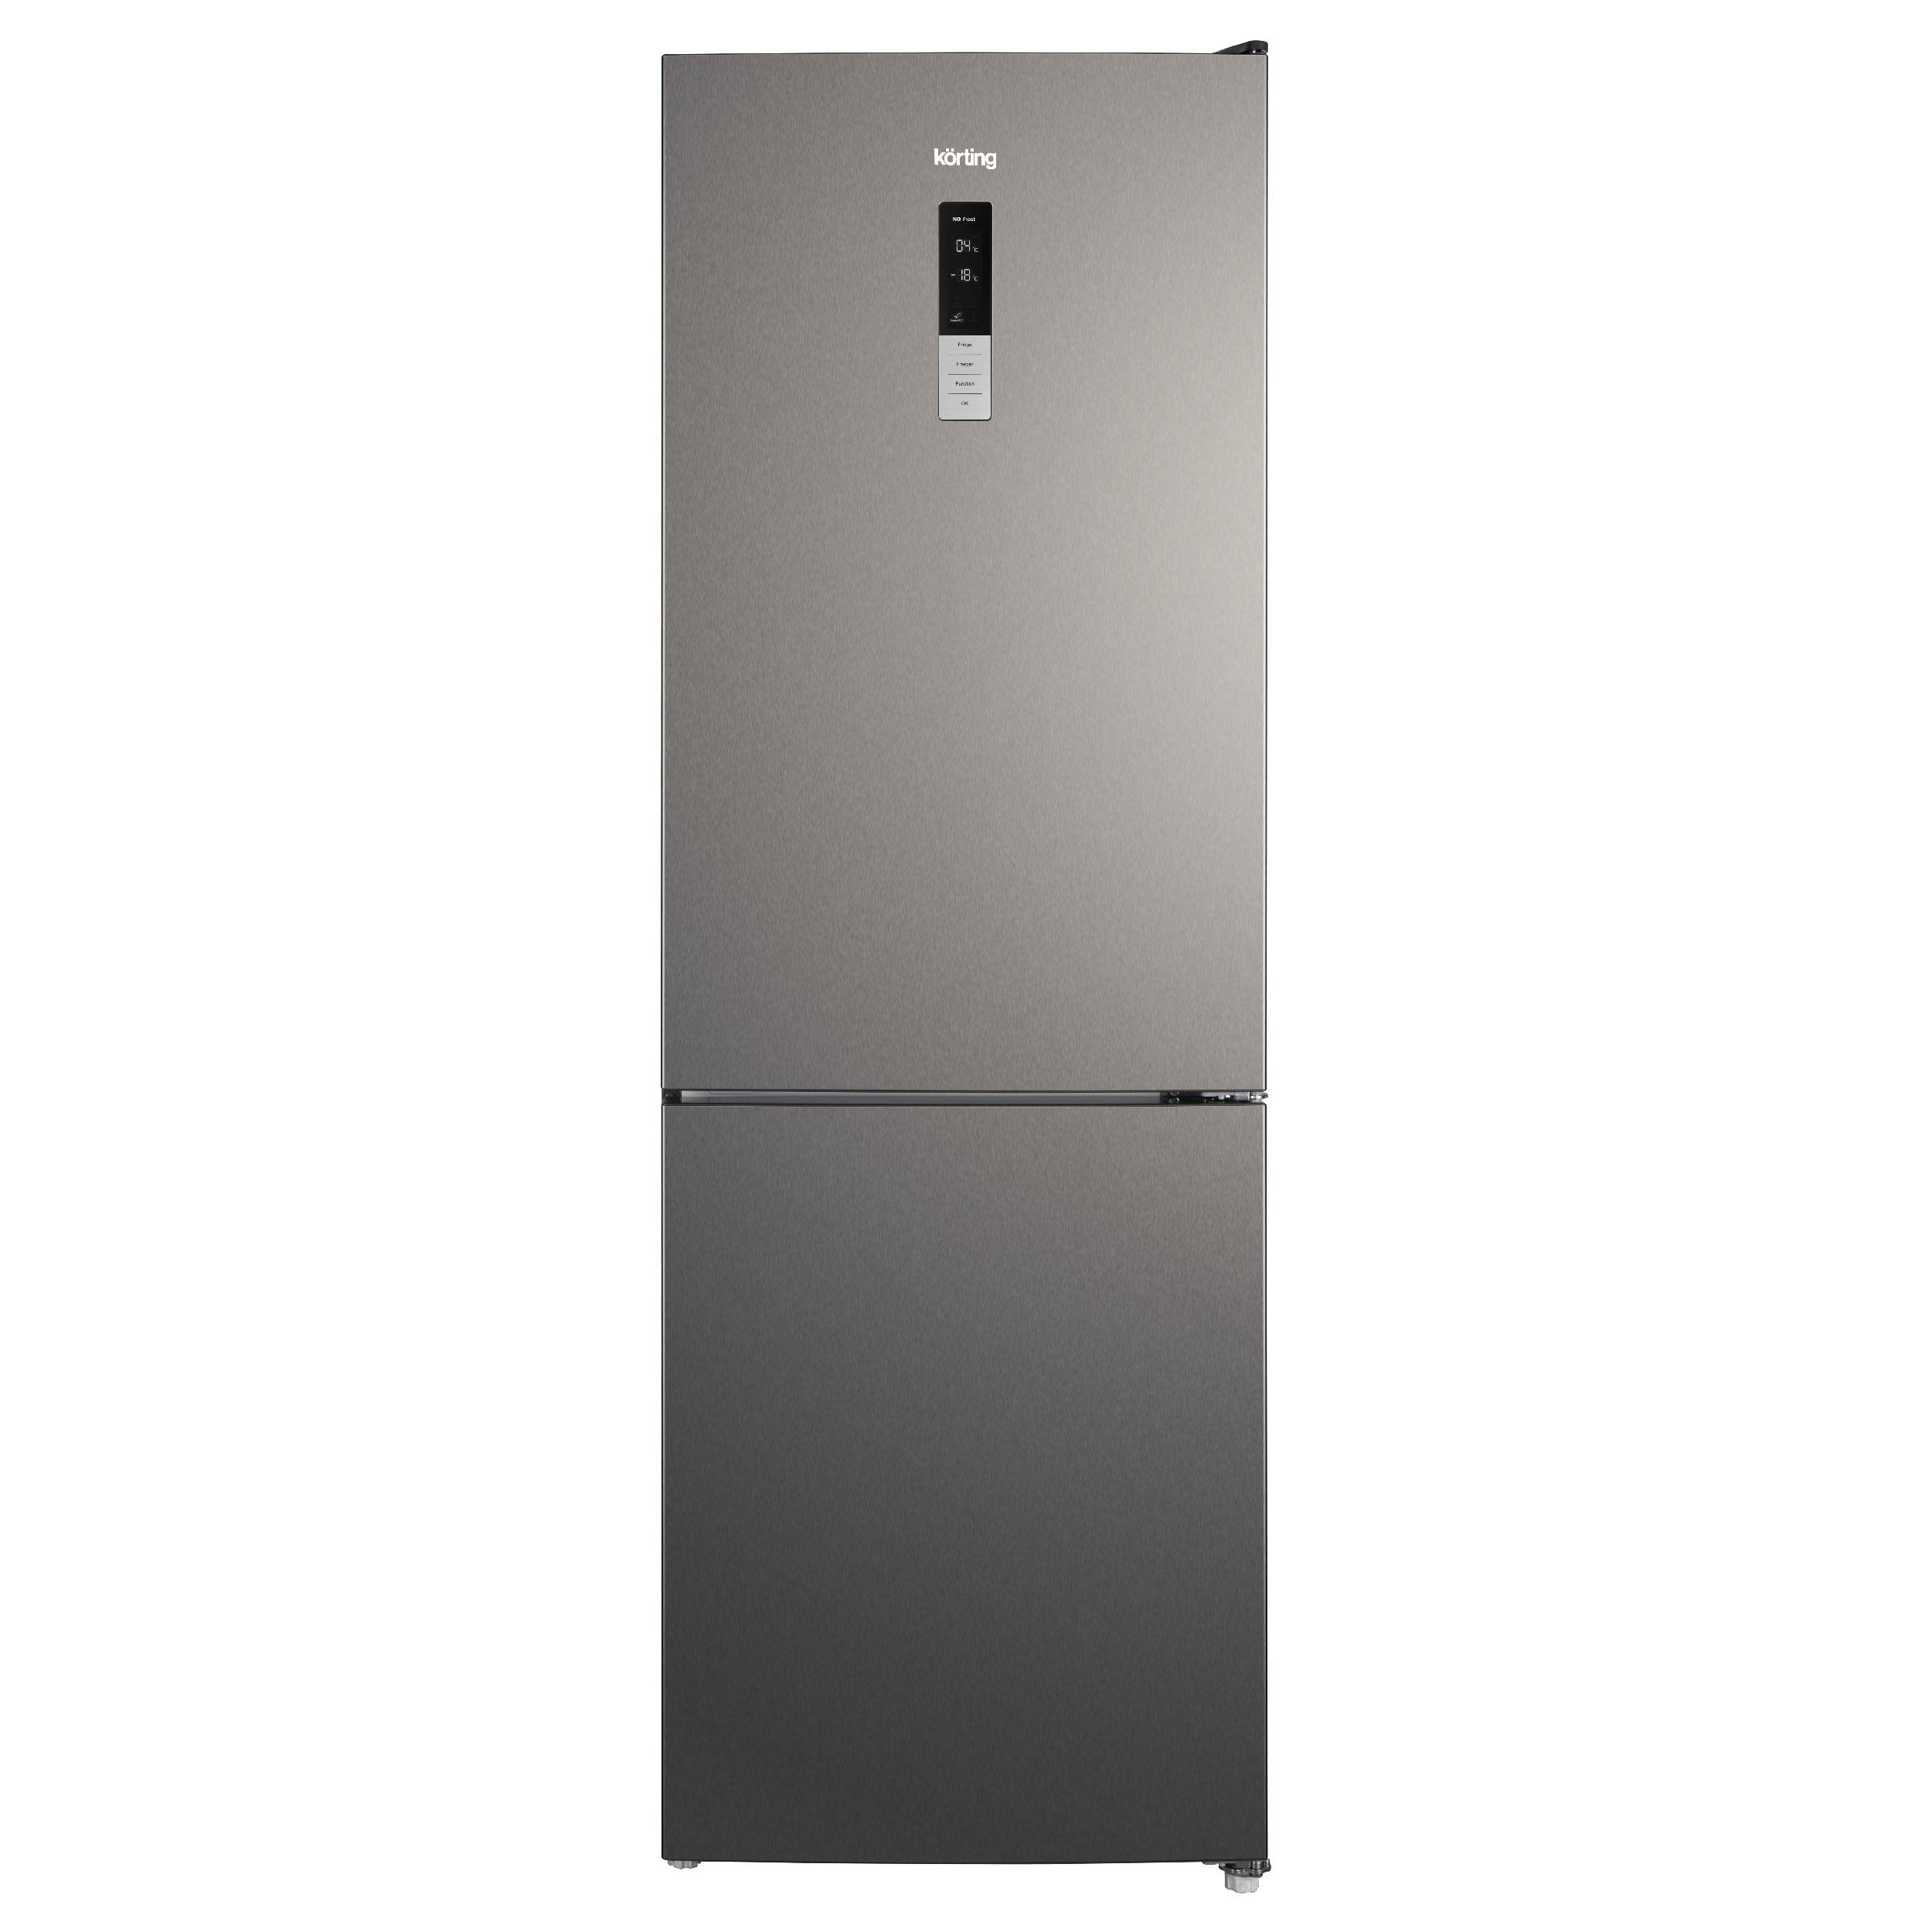 Холодильник Korting KNFC 61869 X серебристый, серый